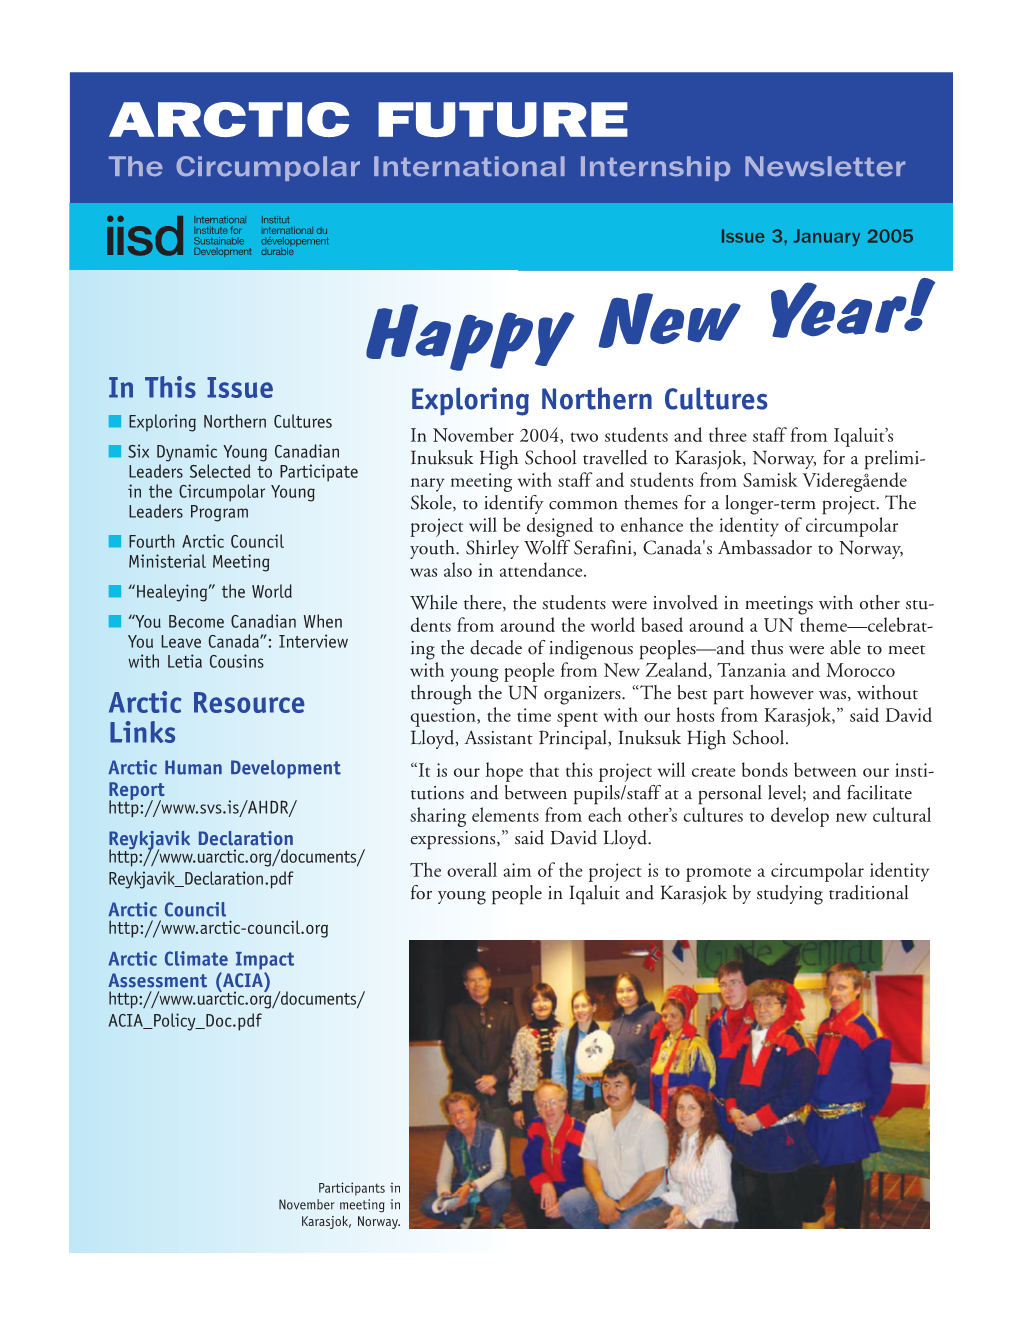 ARCTIC FUTURE the Circumpolar International Internship Newsletter